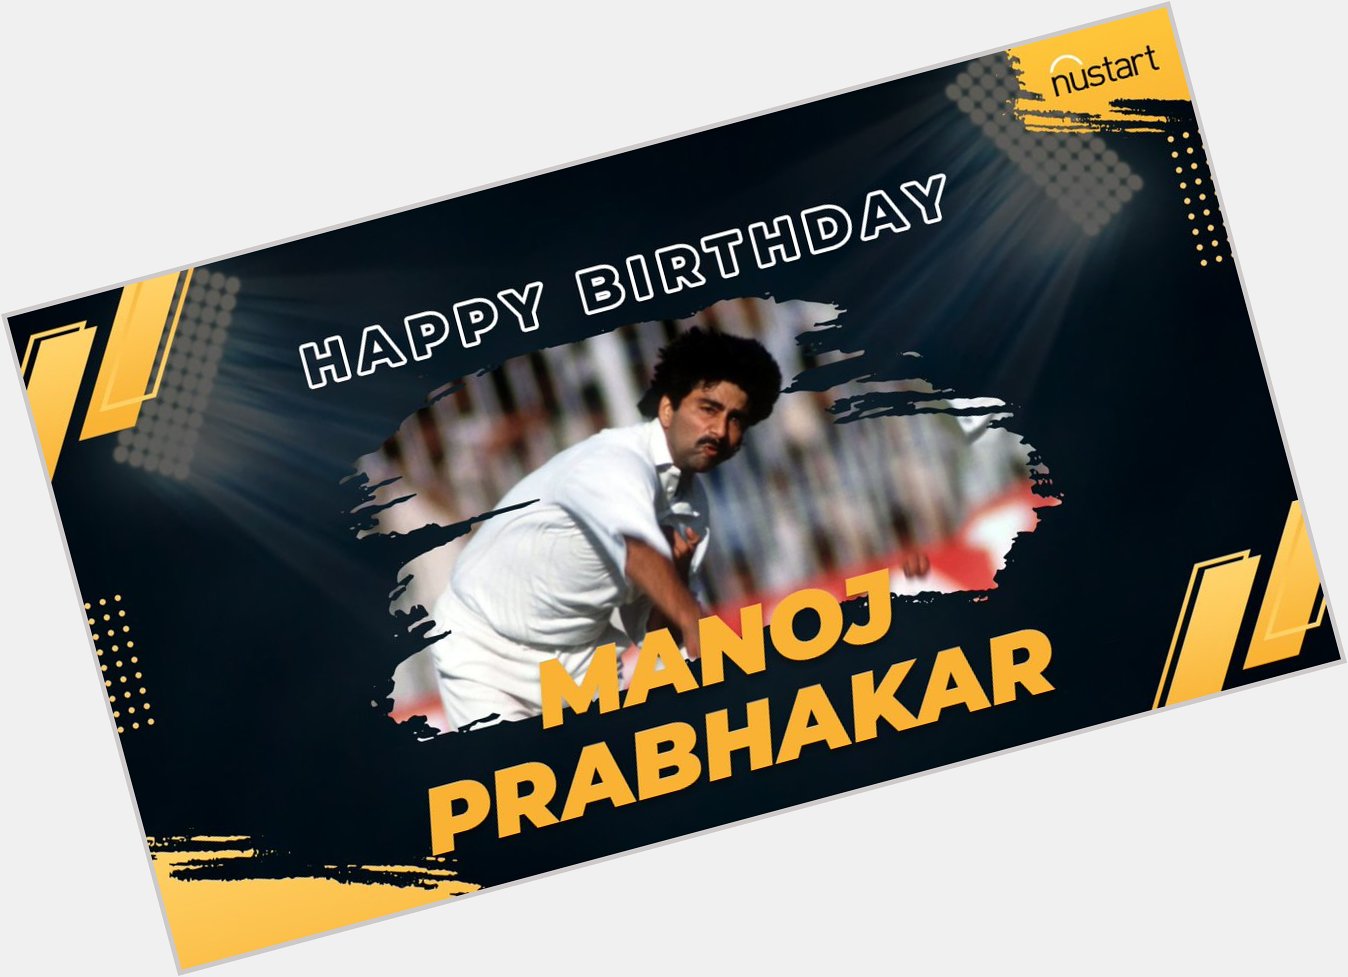 Wishing former all-rounder, Manoj Prabhakar, a very happy birthday! 